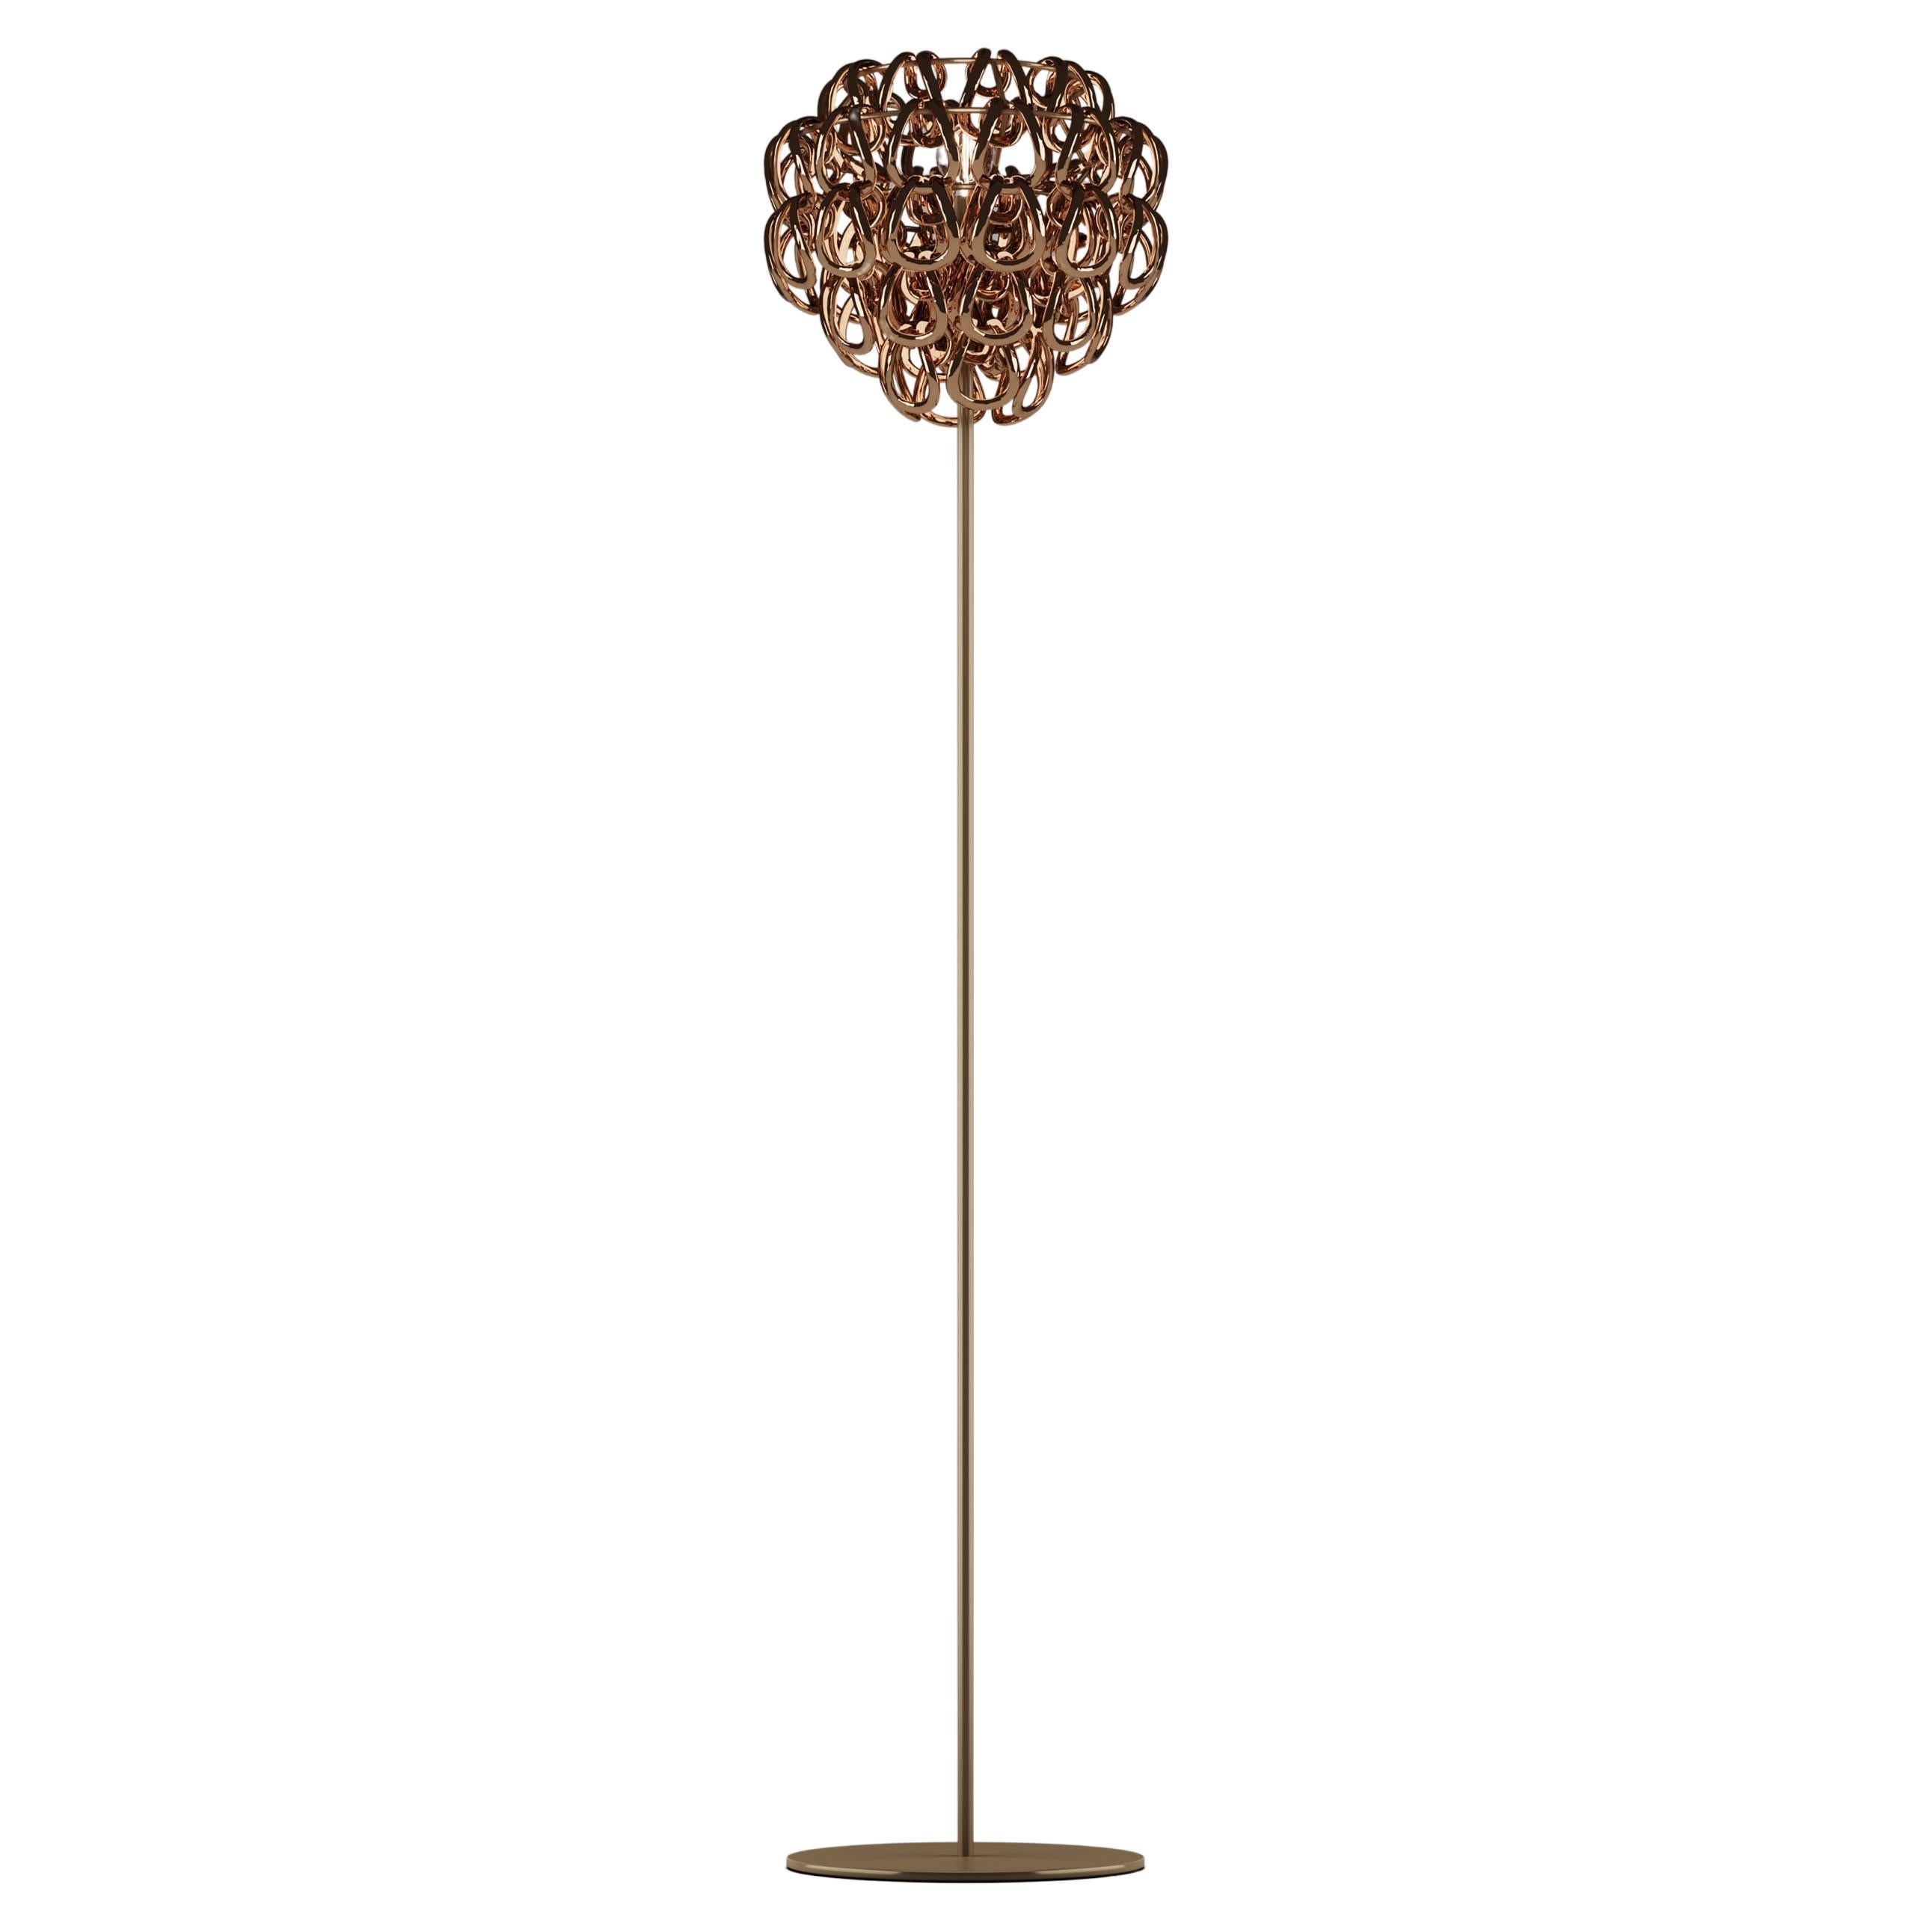 Vistosi Giogali Floor Lamp in Crystal Copper with Matt Bronze Frame